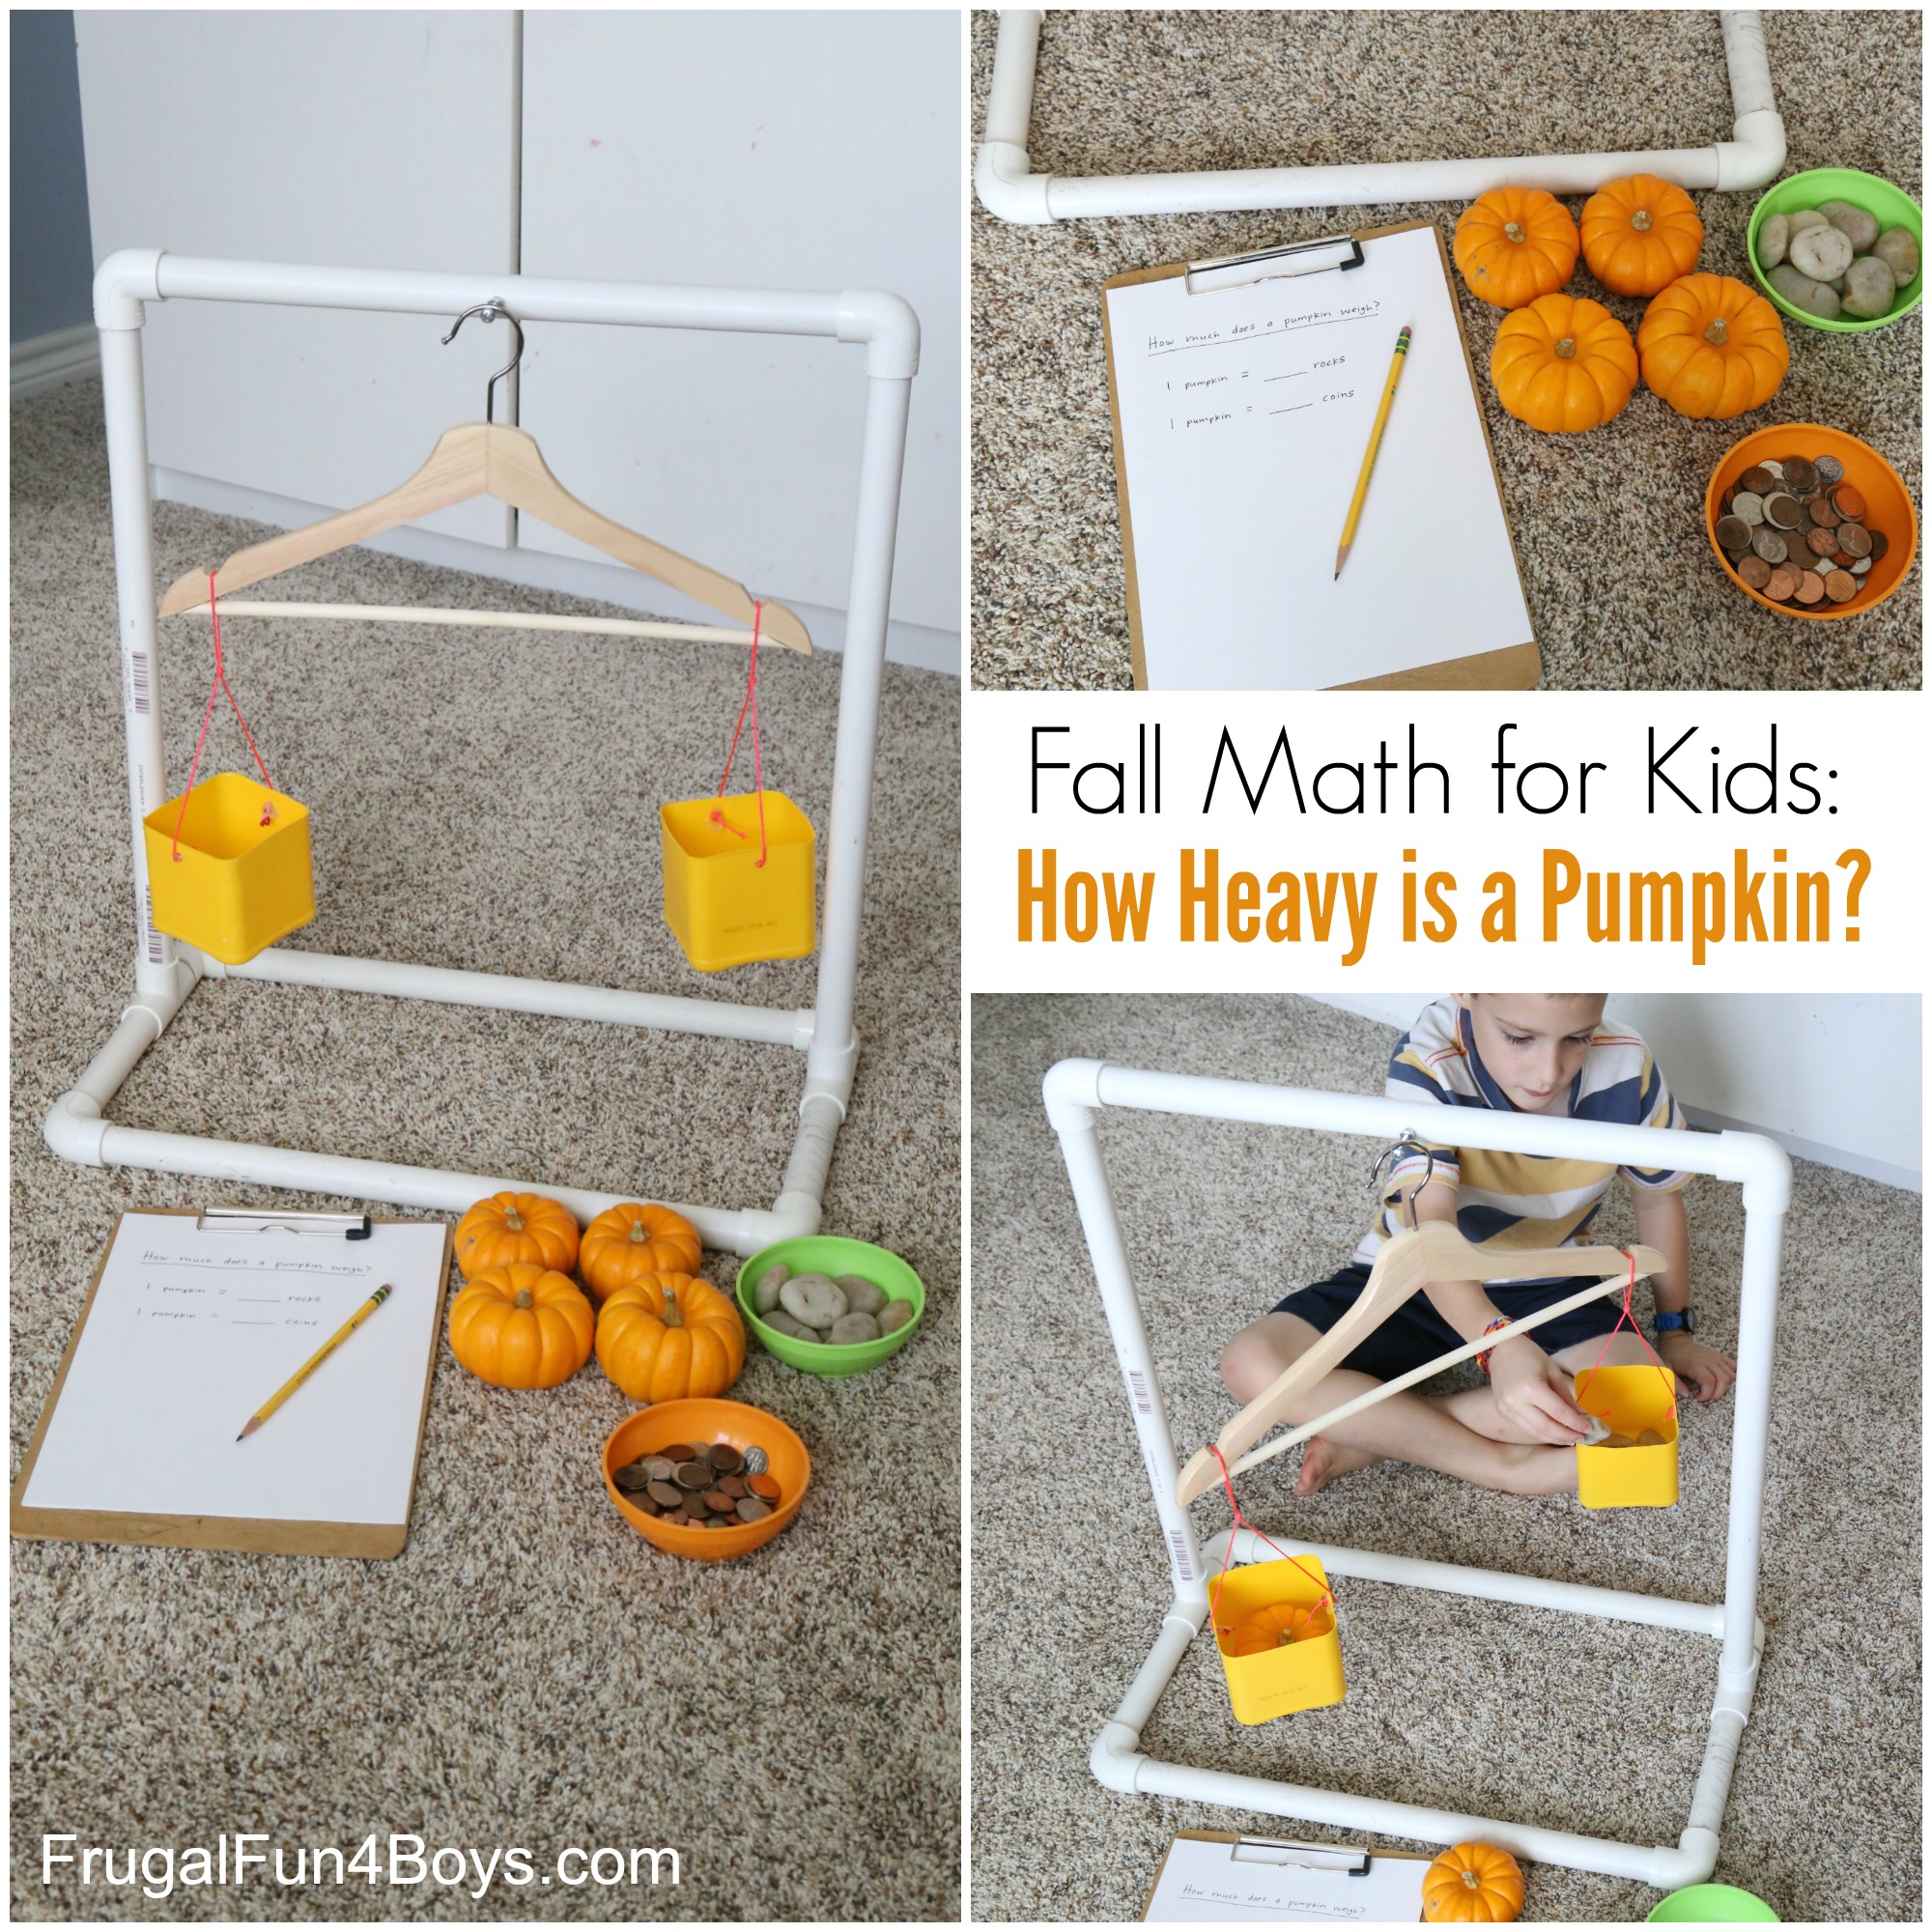 Fall Math for Kids: How Heavy is a Pumpkin?